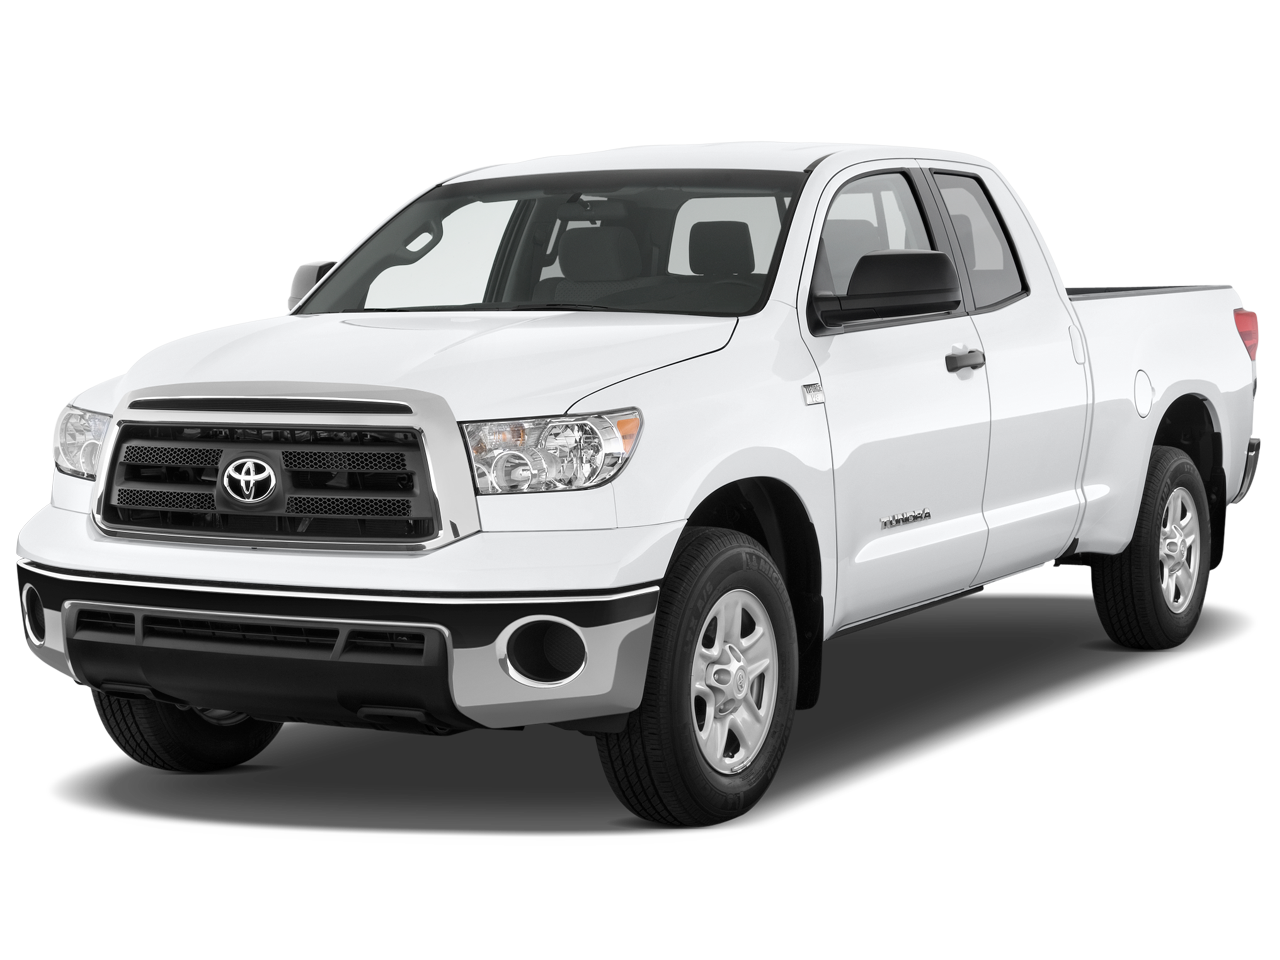 2016 Toyota Tundra: Do You Re